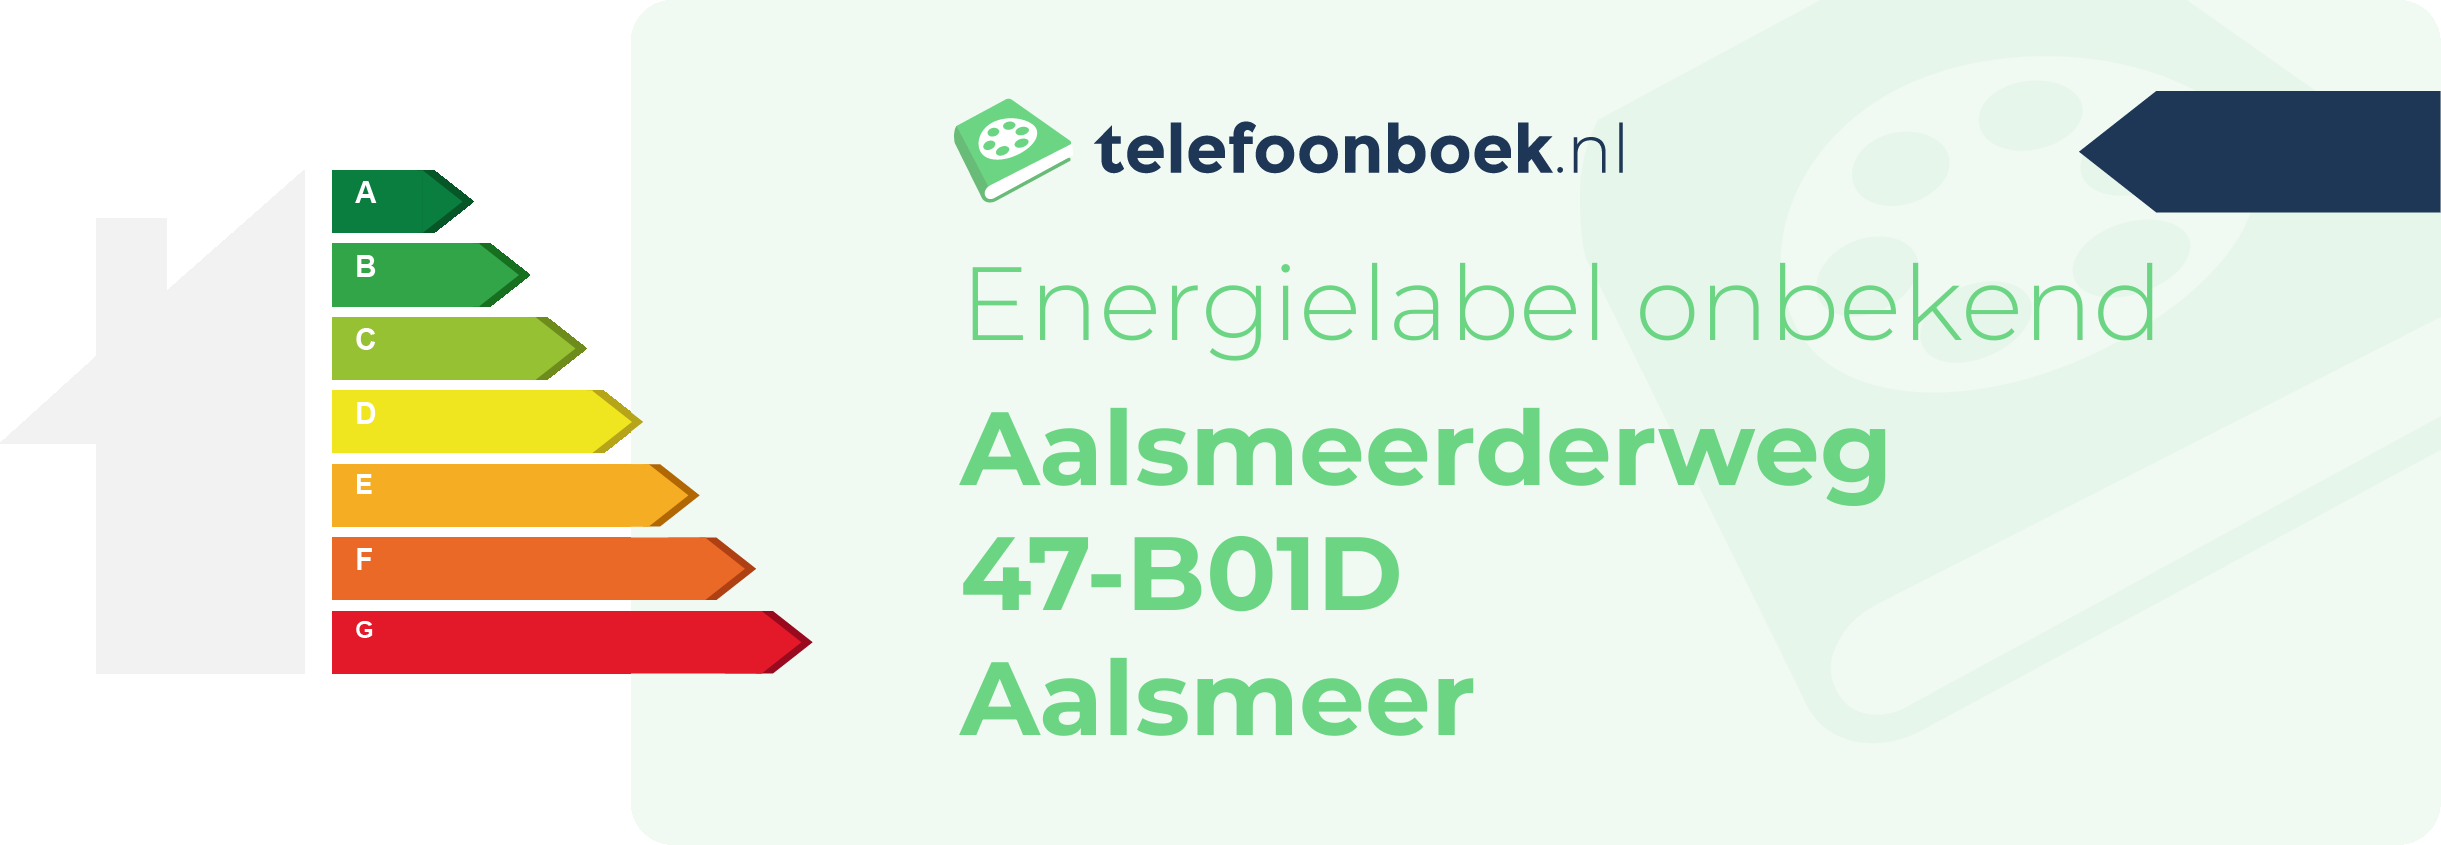 Energielabel Aalsmeerderweg 47-B01D Aalsmeer